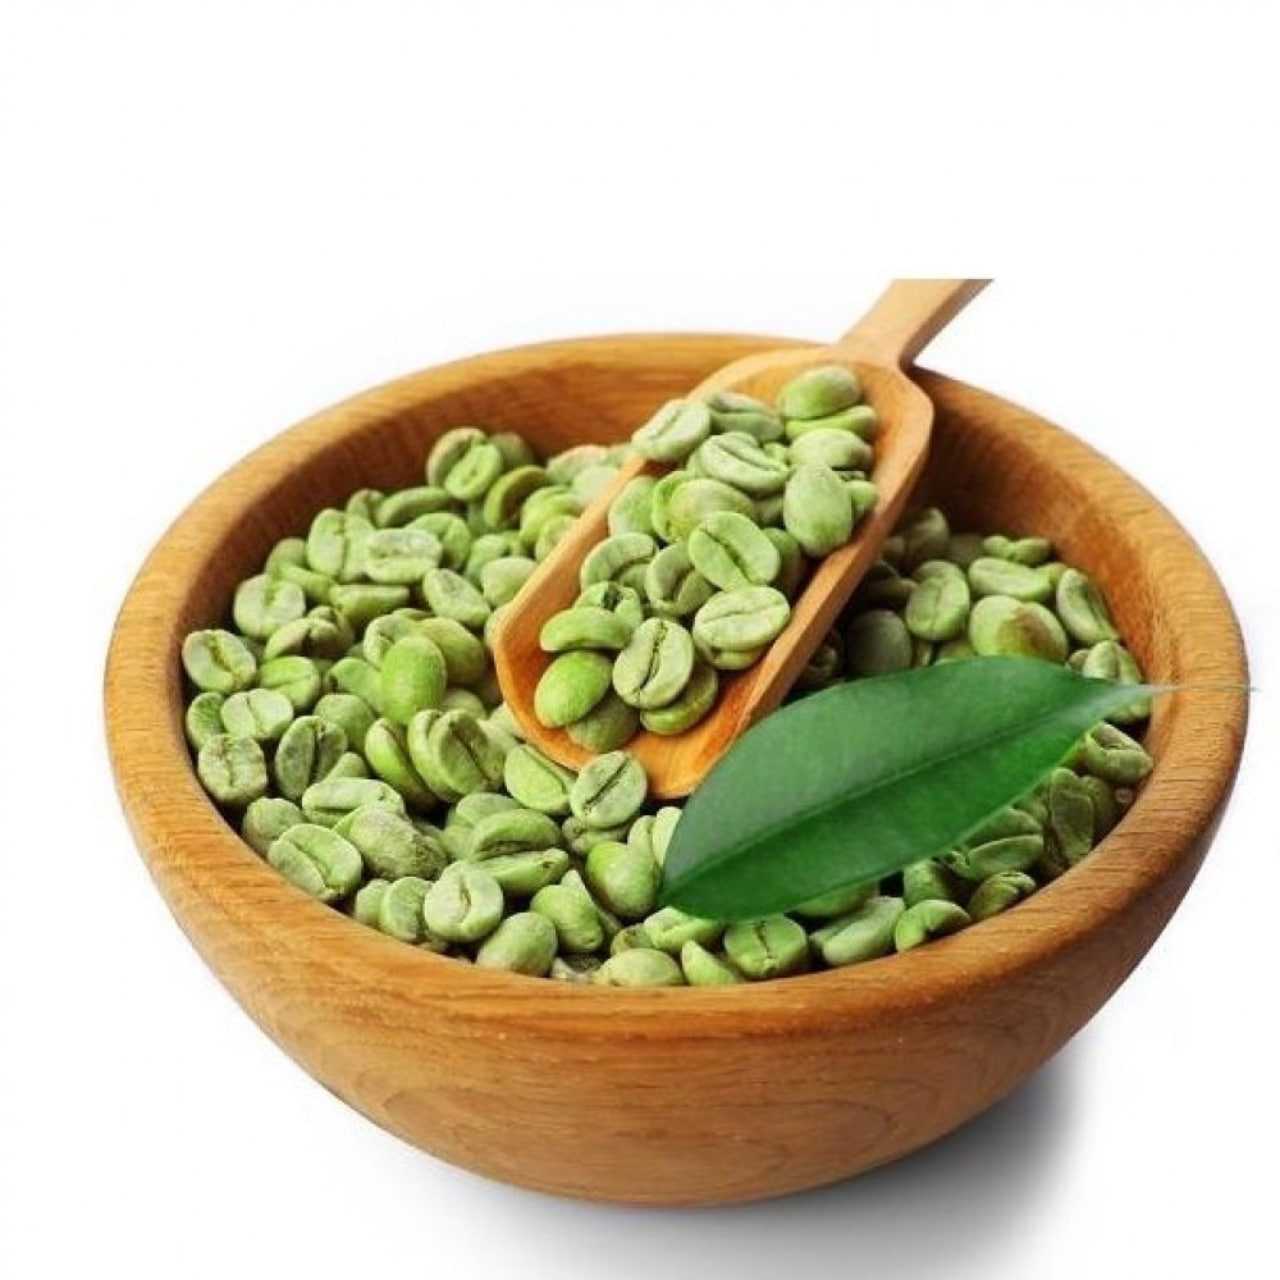 Green coffee bean (Coffea Arabica)